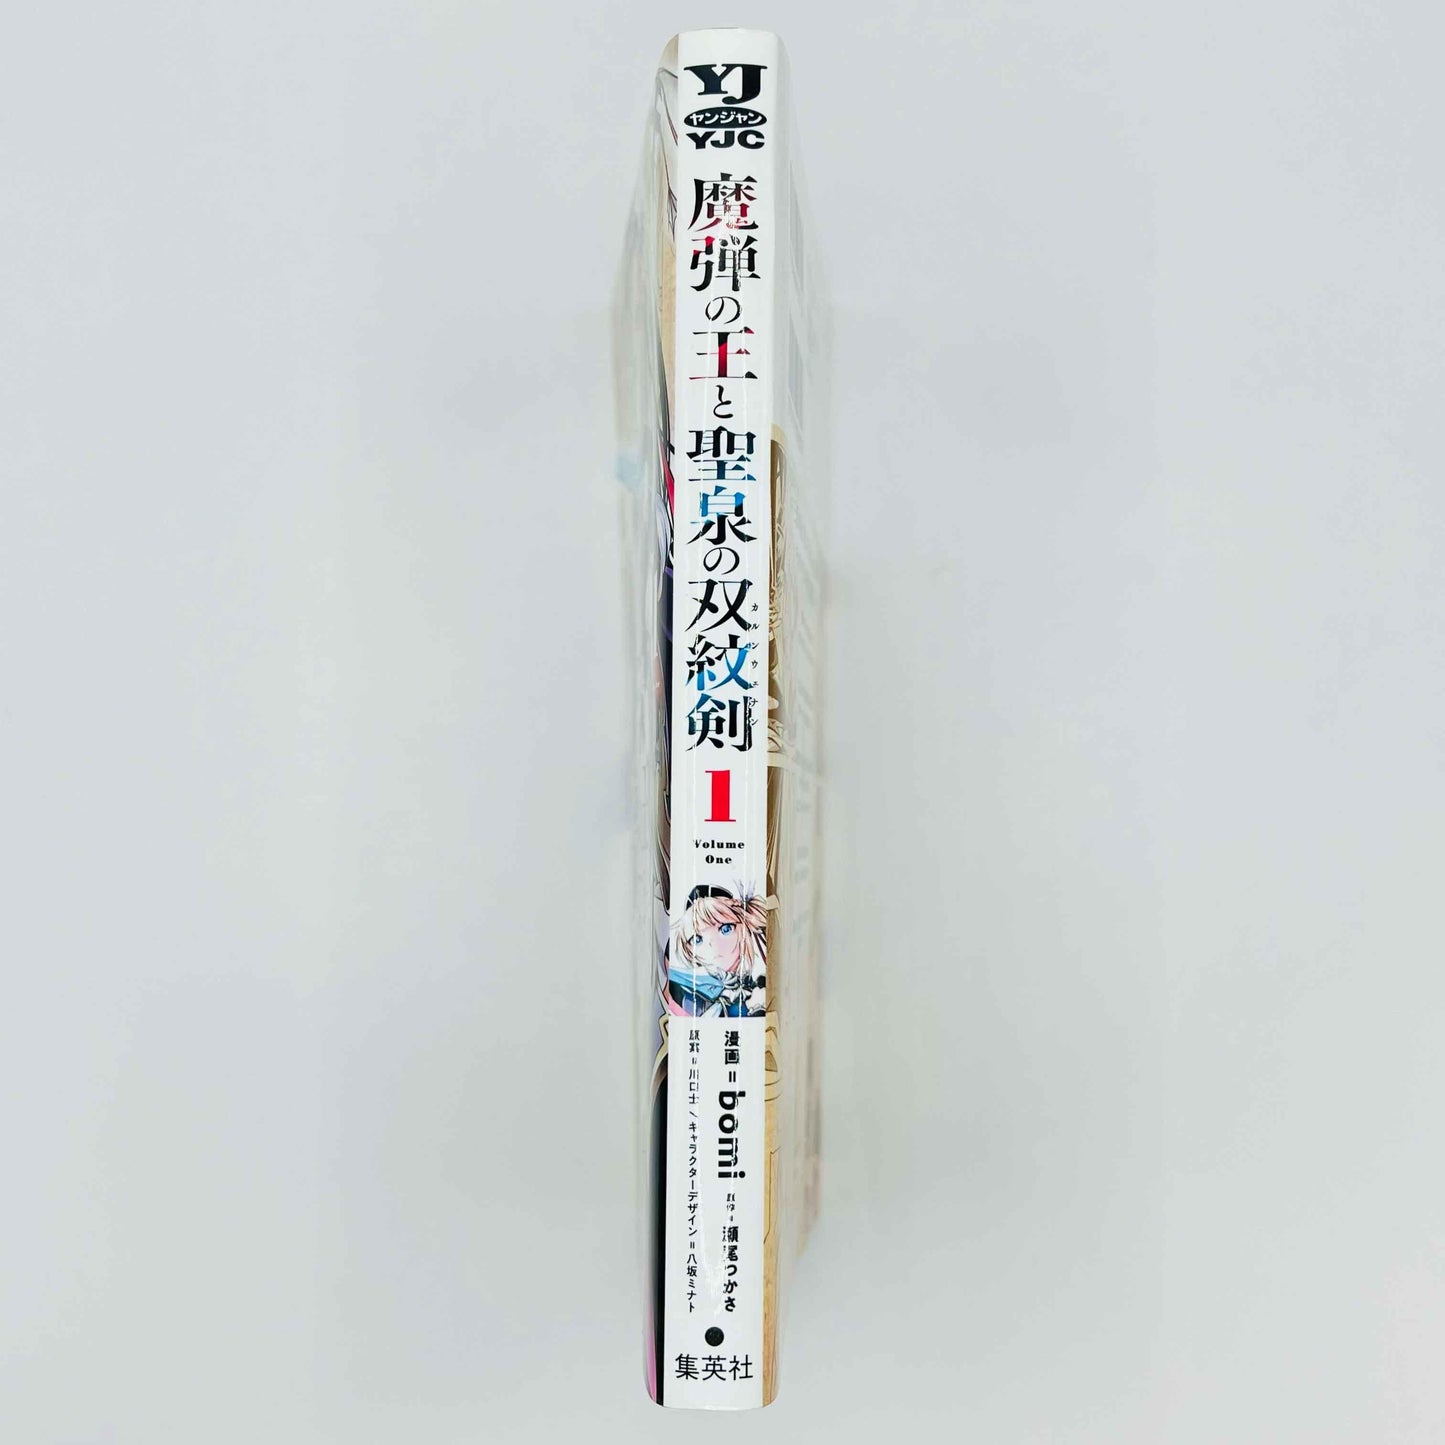 Lord Marksman and Carnwenhan - Volume 01 - 1stPrint.net - 1st First Print Edition Manga Store - M-MARKSMAN2-01-001